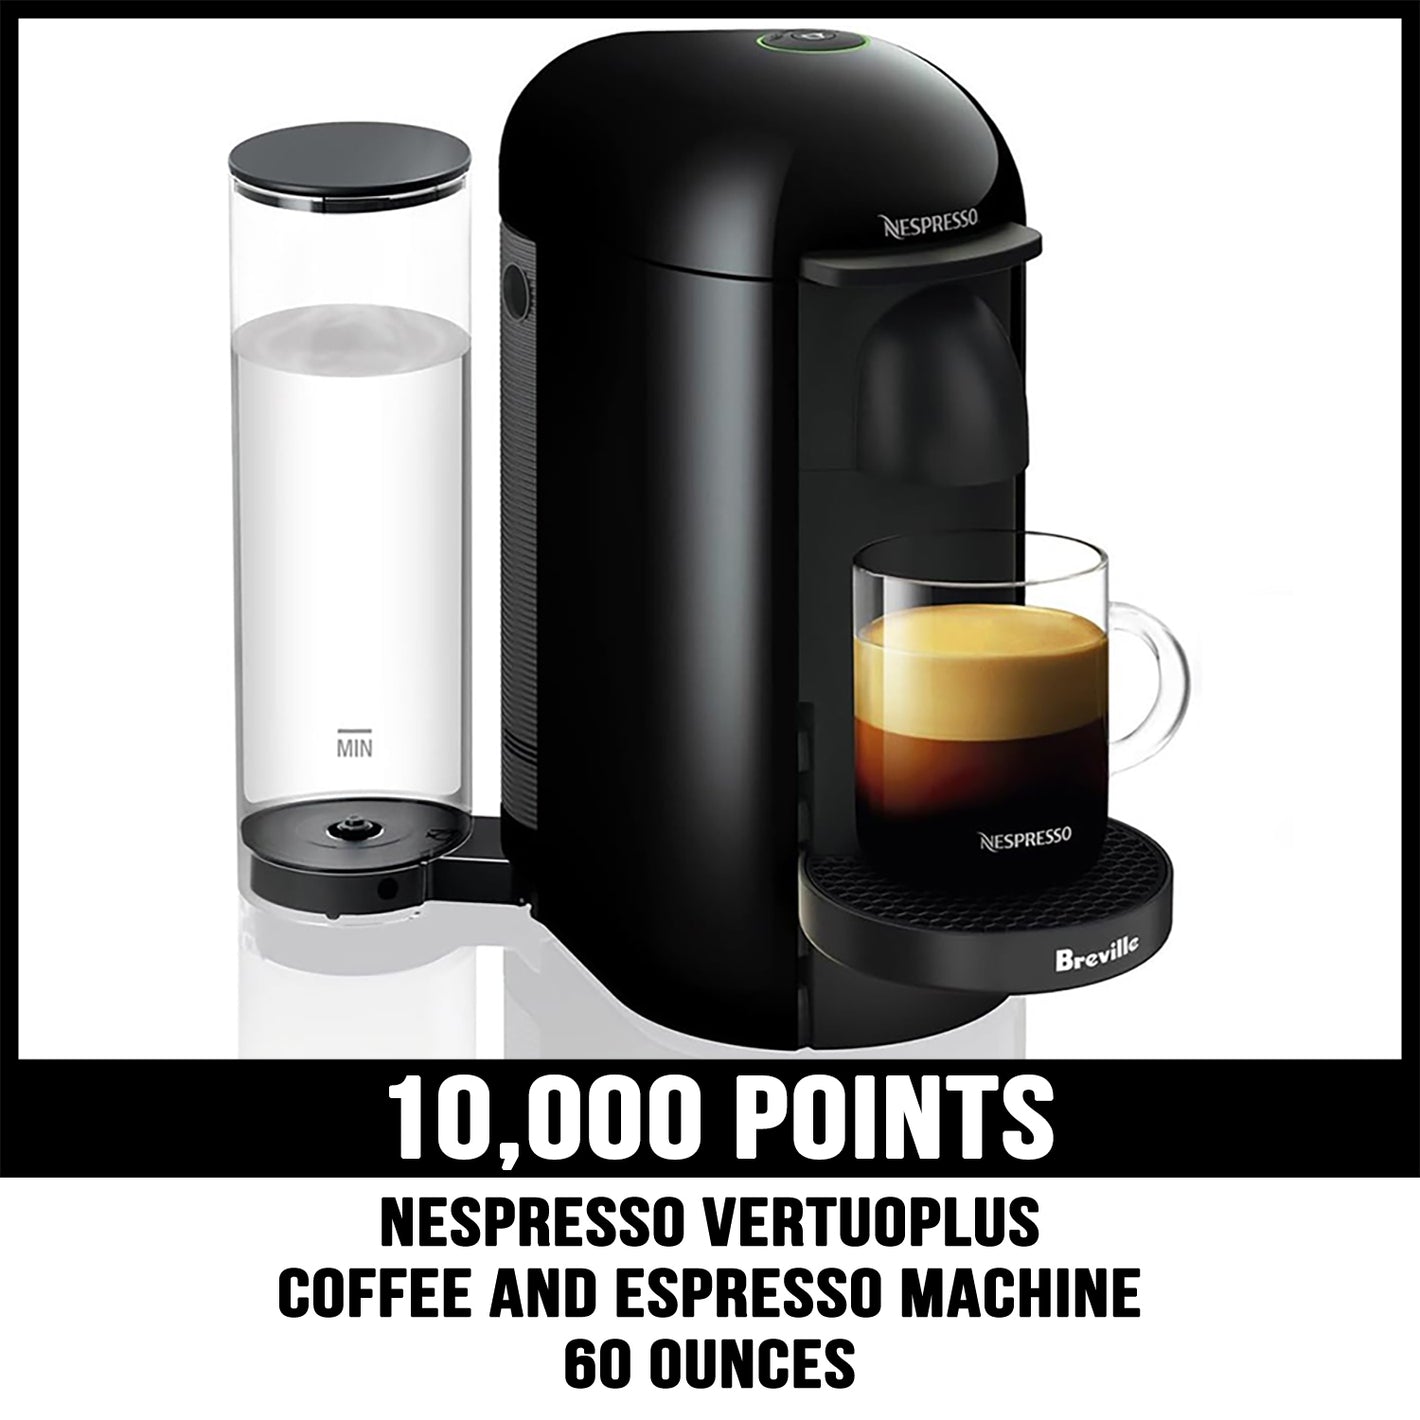 Nespresso VertuoPlus prize for 10000 points